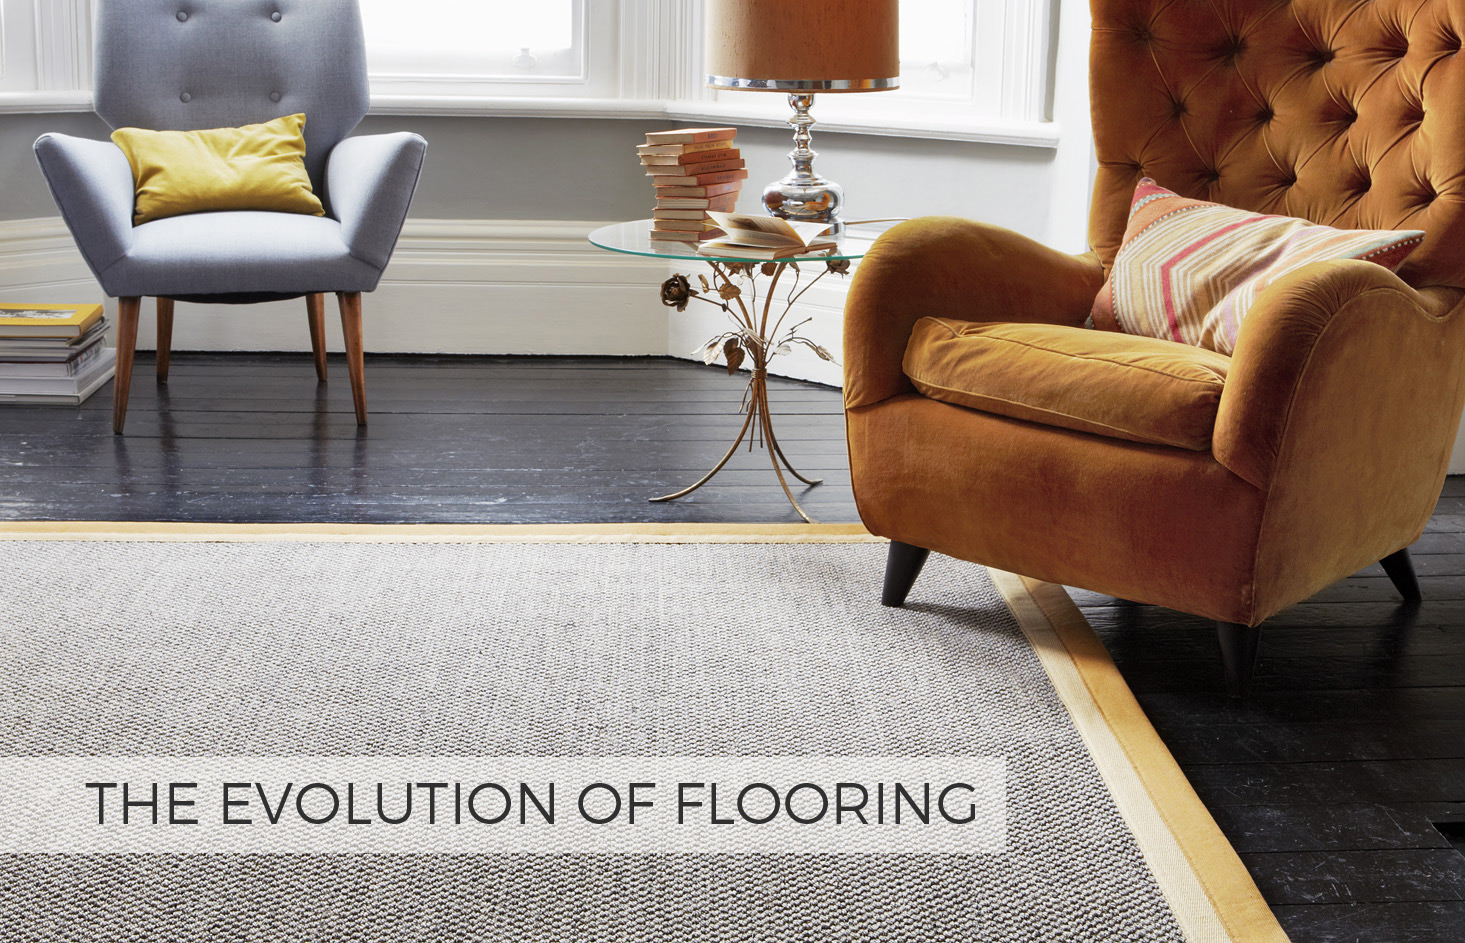 The Evolution of Flooring